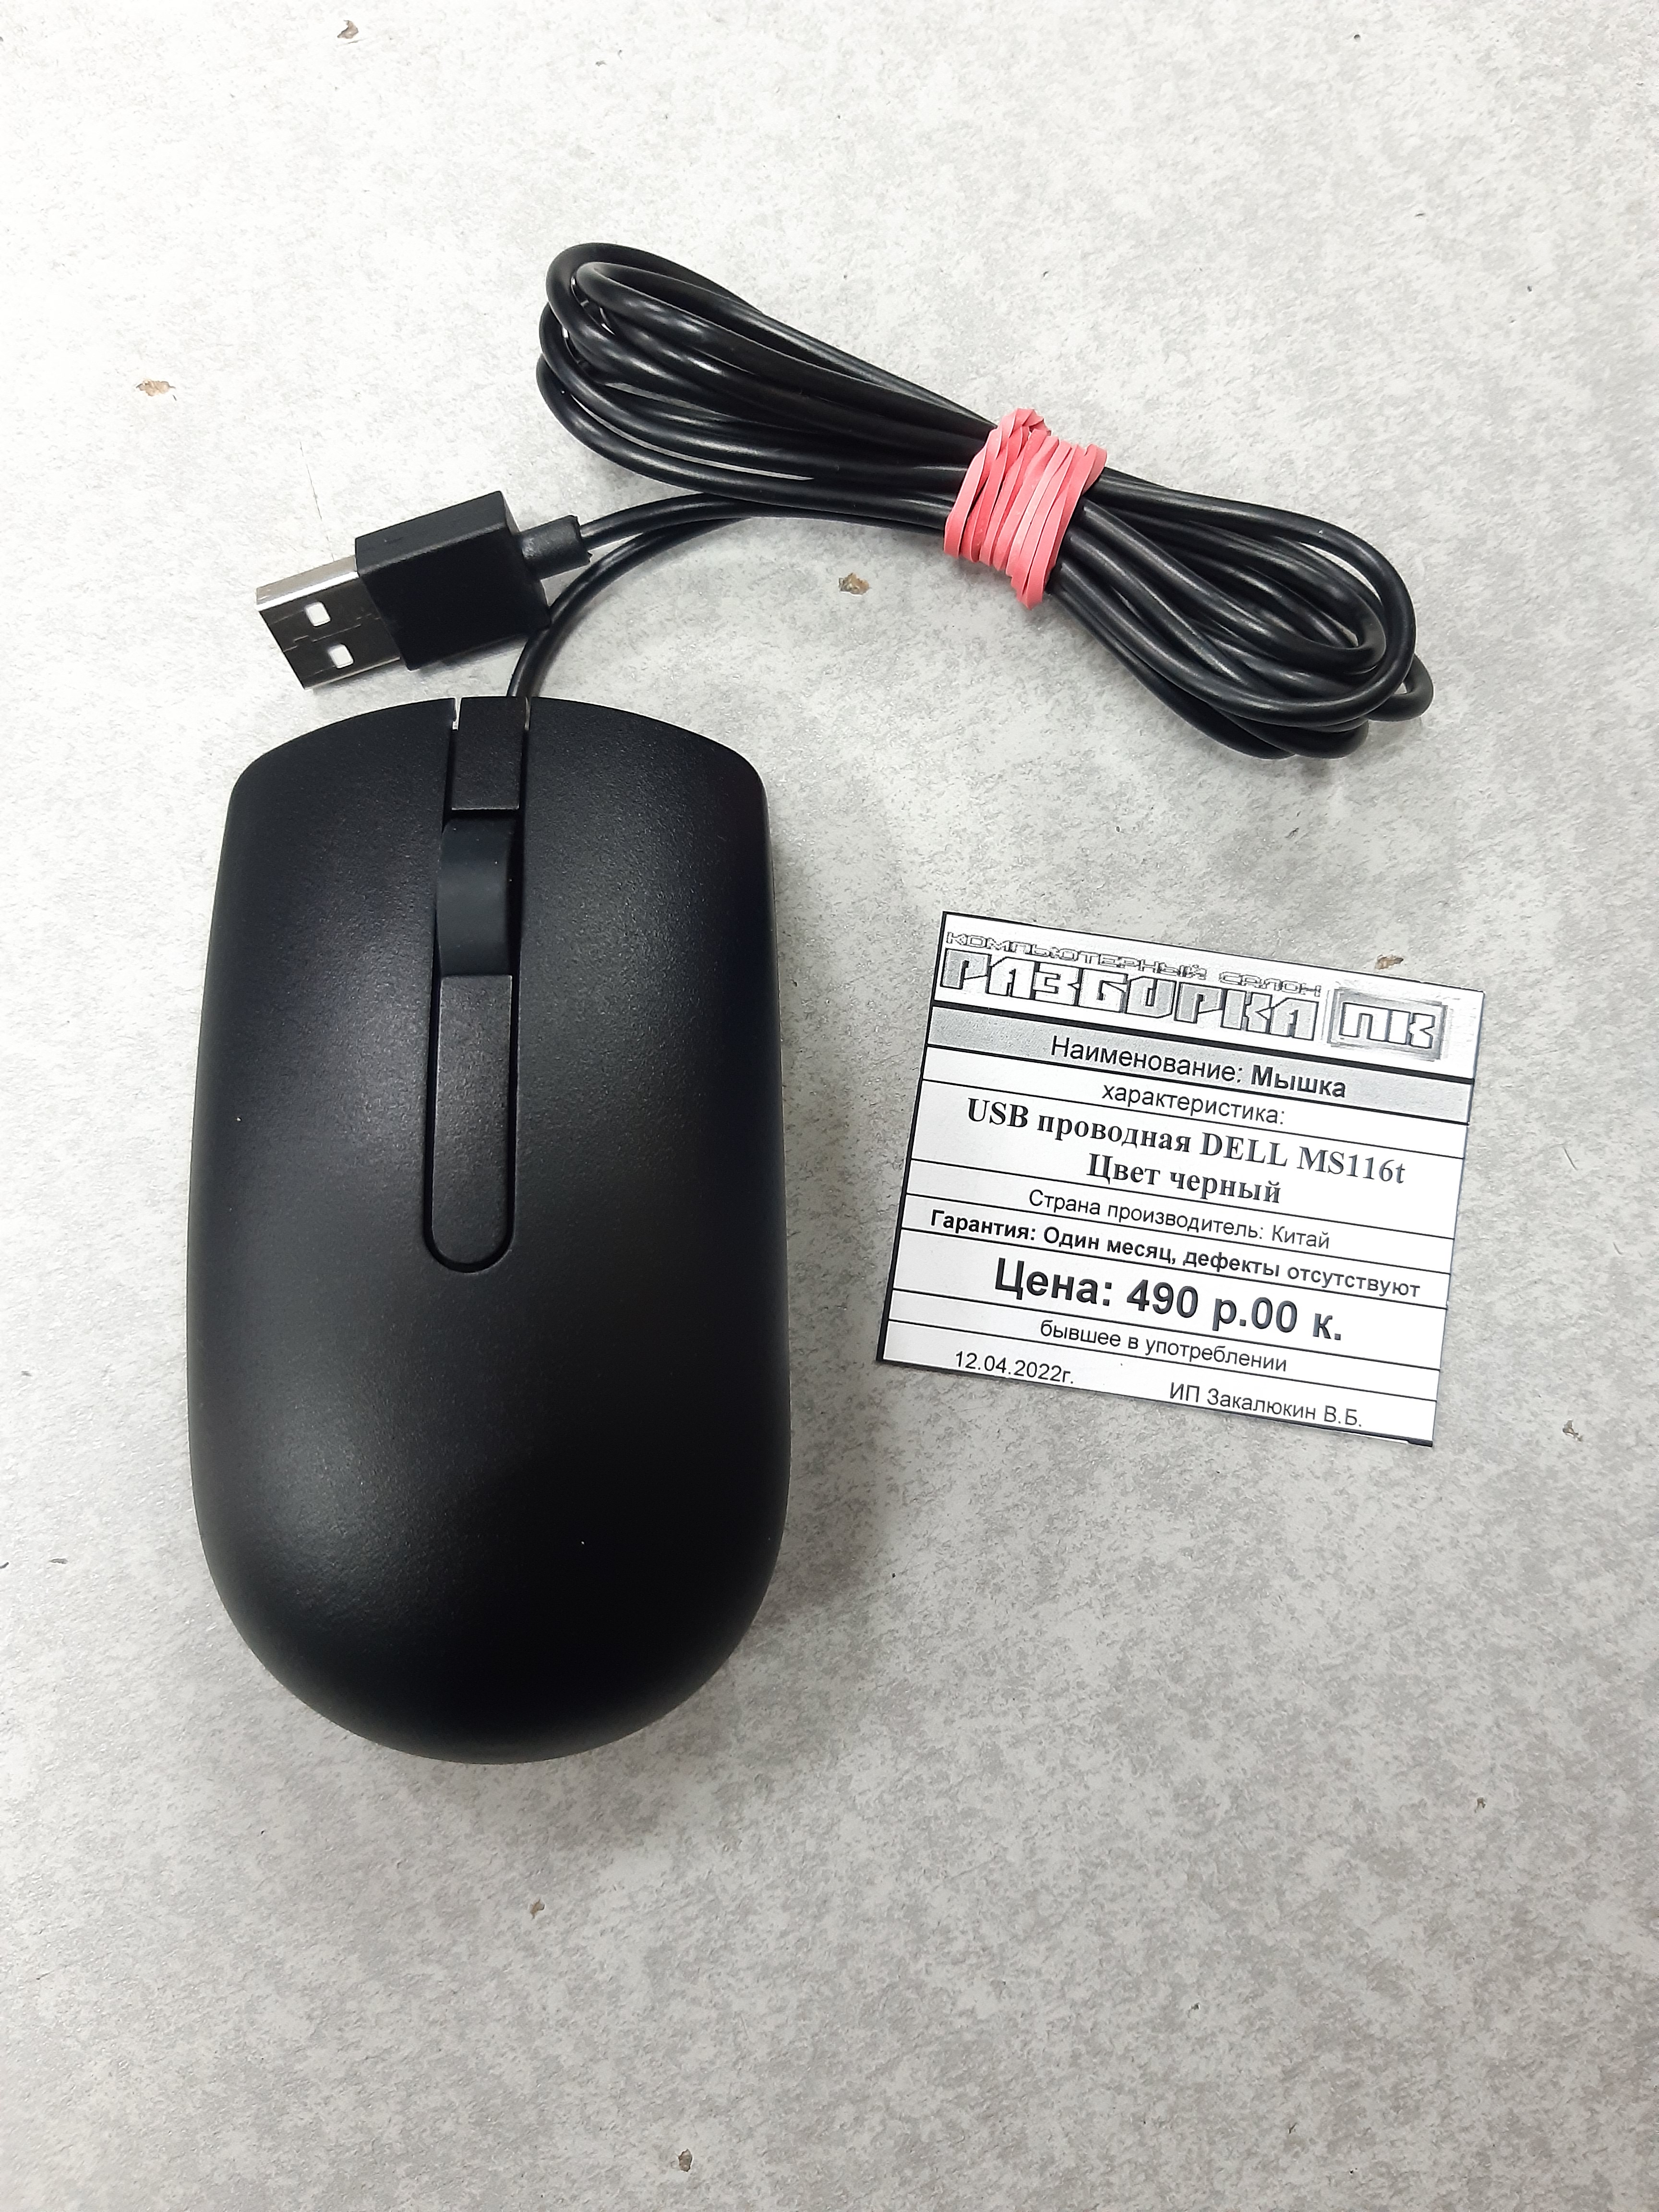 Мышка USB проводная DELL MS116t